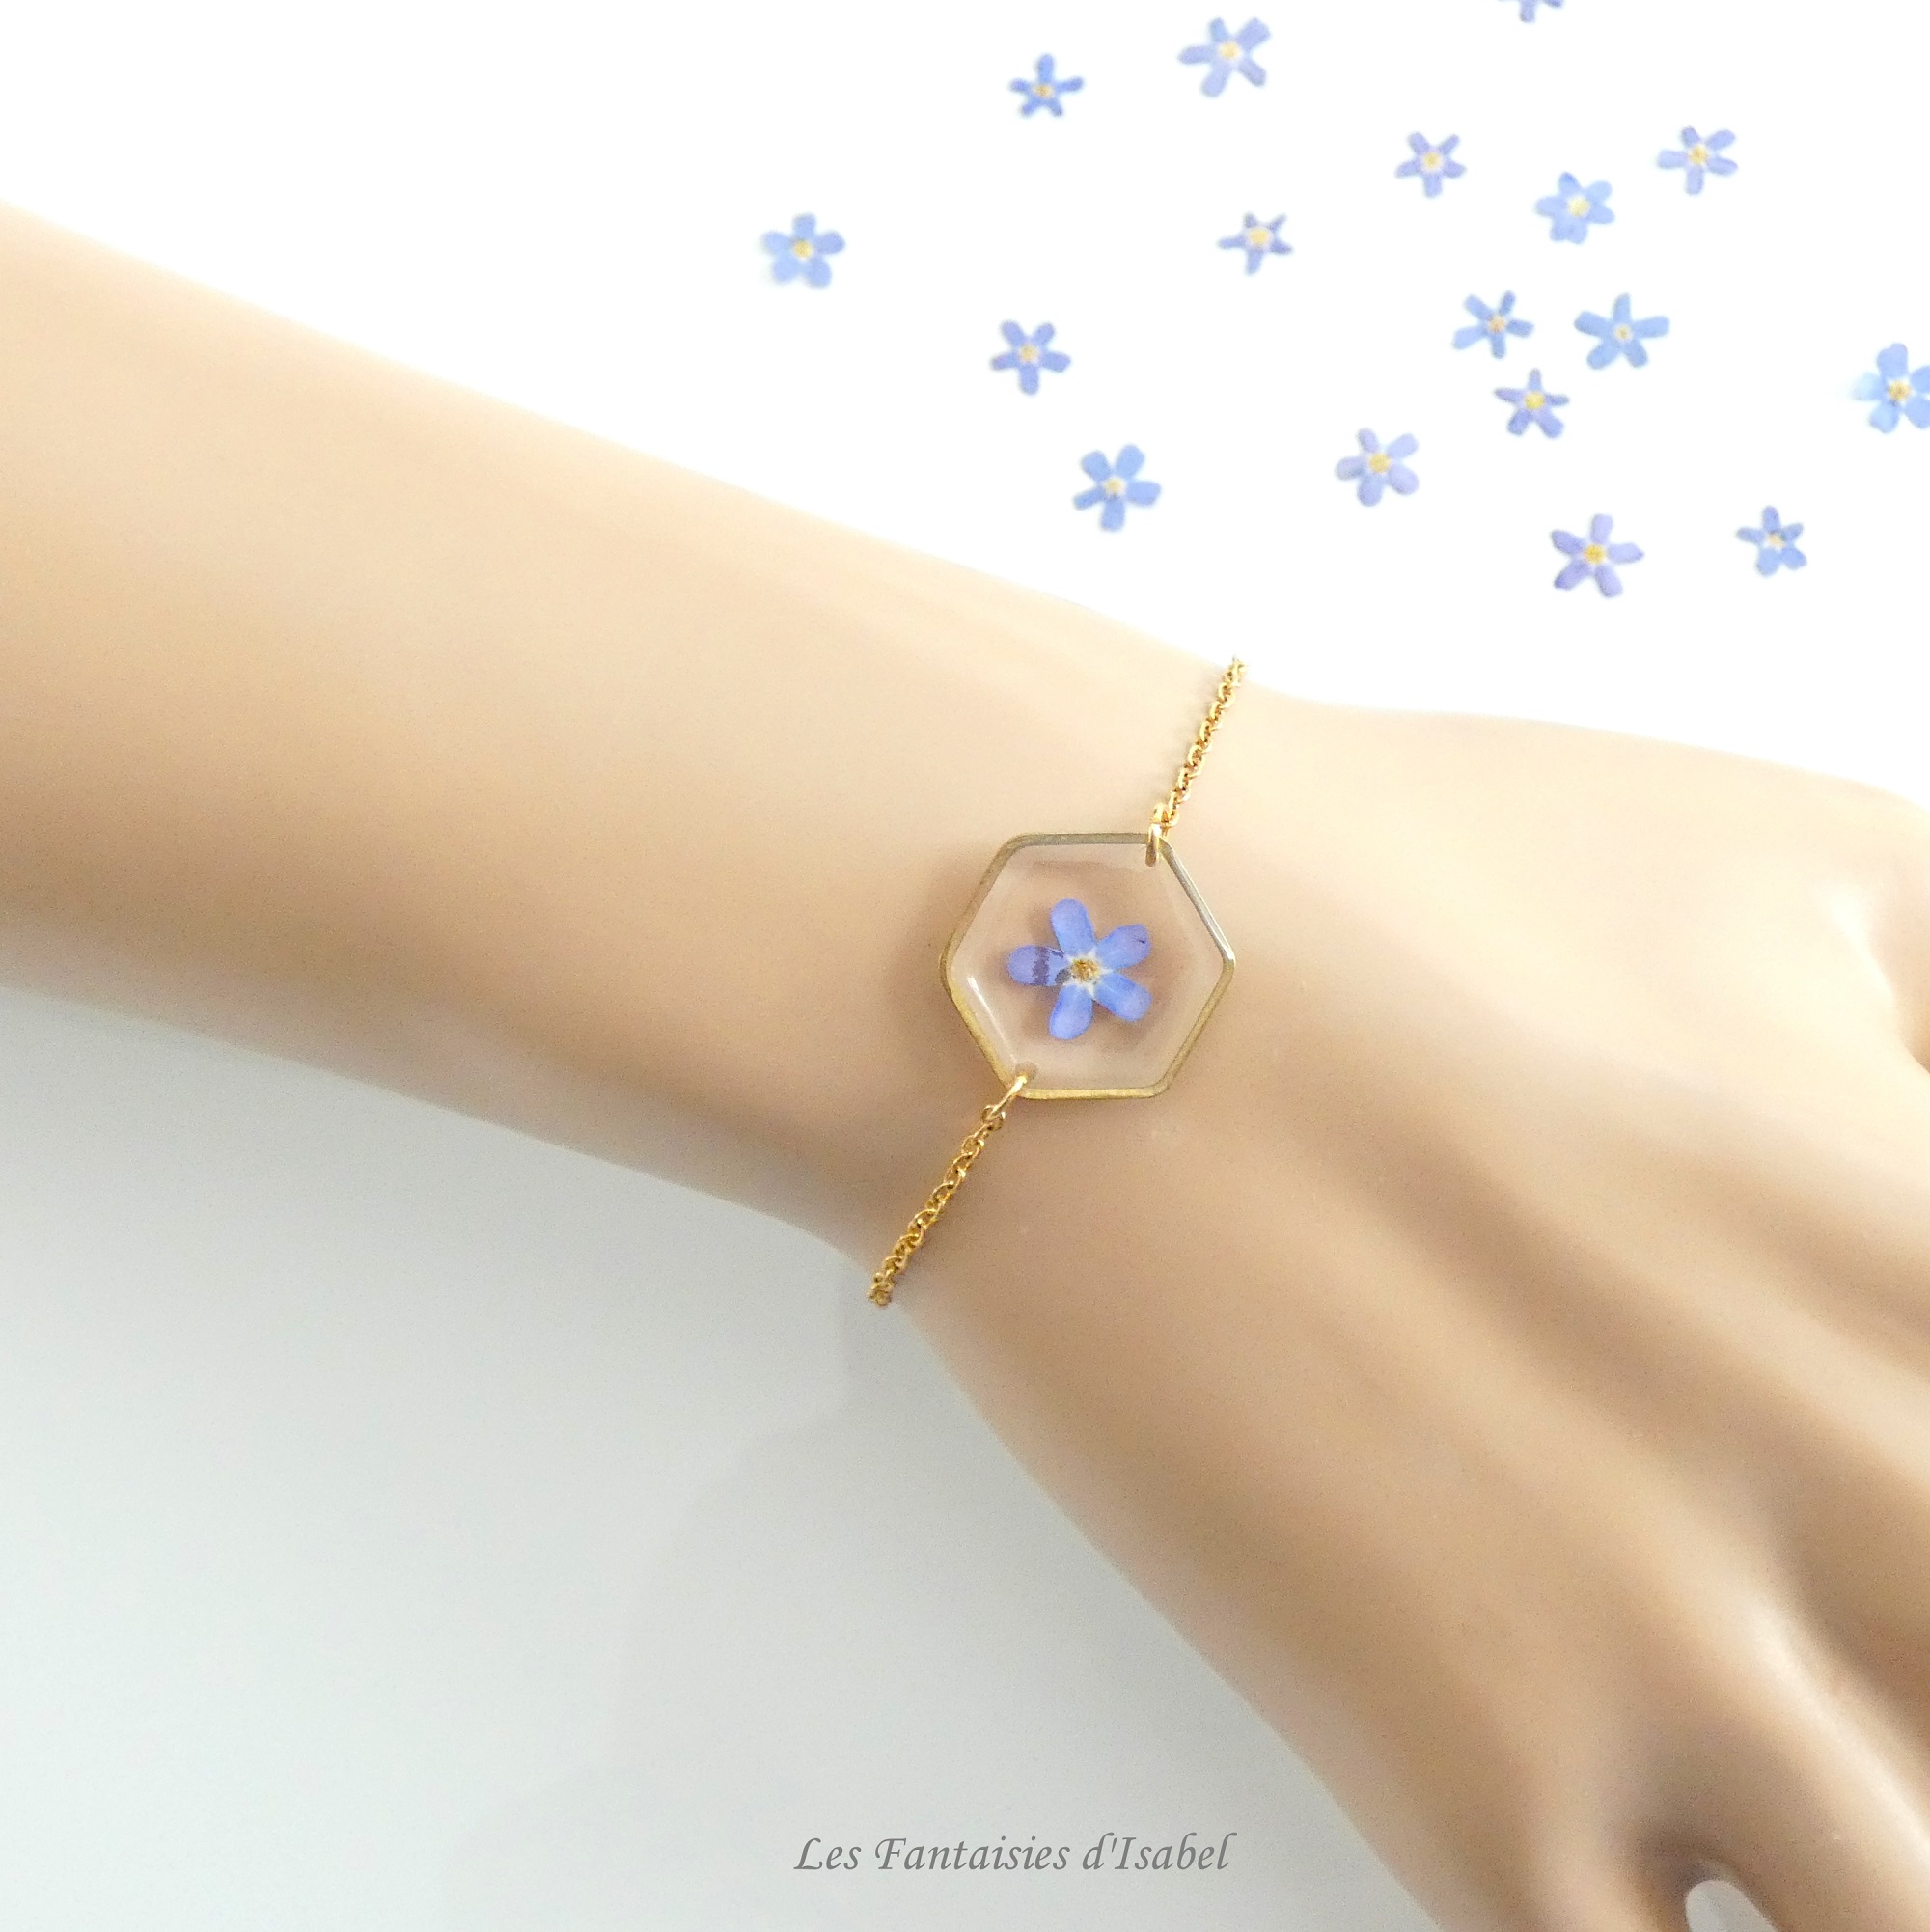 62-bracelet hesagonal acier inox doré fleur myosotis bleu artisanal landes porté